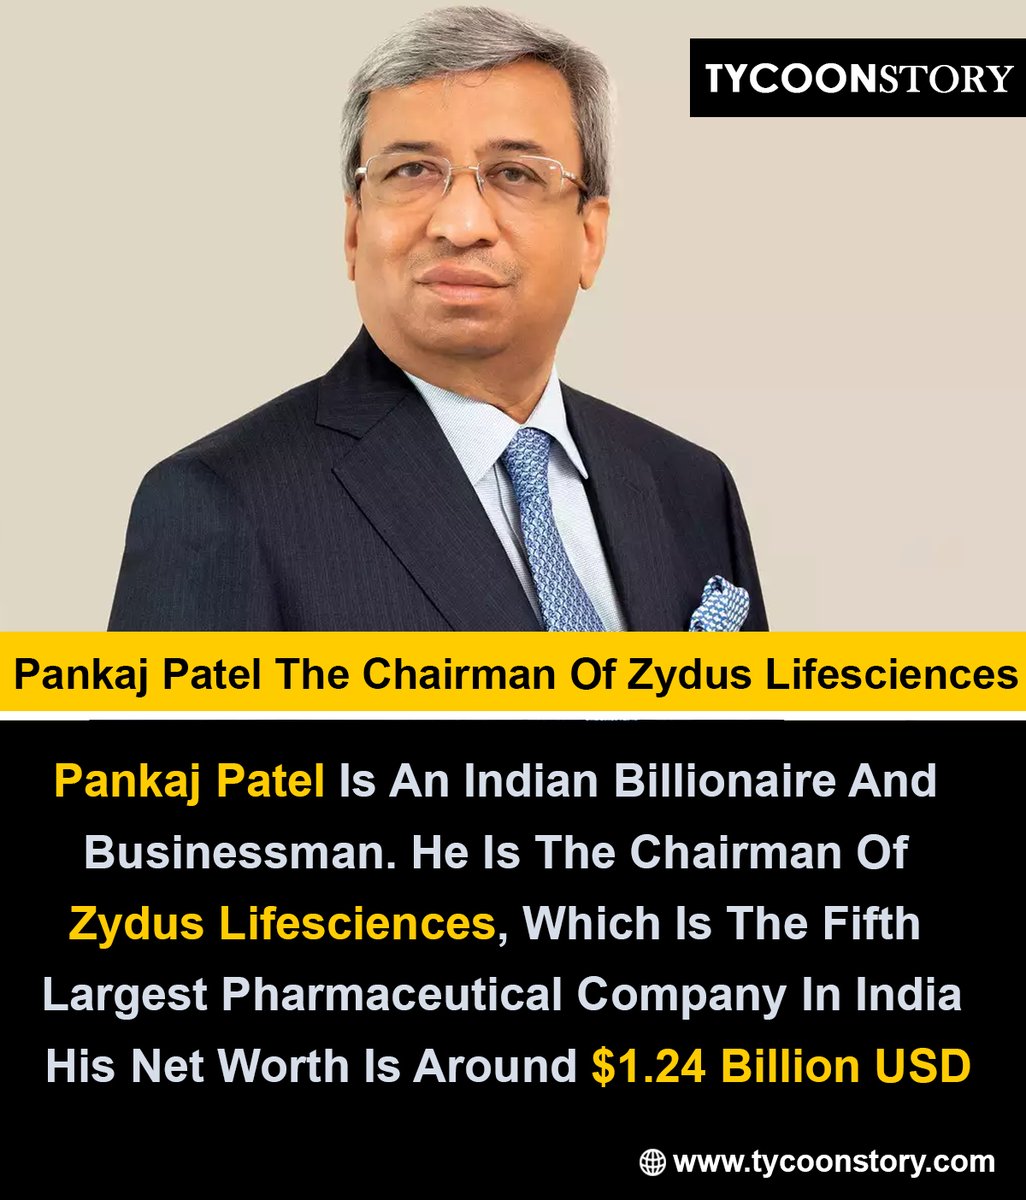 Pankaj Patel The Chairman Of Zydus Lifesciences
#PankajPatel #ZydusChairman #PharmaLeader #HealthcareInnovator #BiotechIndustry #HealthcareVisionary #MedicalResearch #DrugDiscovery #HealthcareLeadership #BiopharmaExecutive @ZydusUniverse 
tycoonstory.com